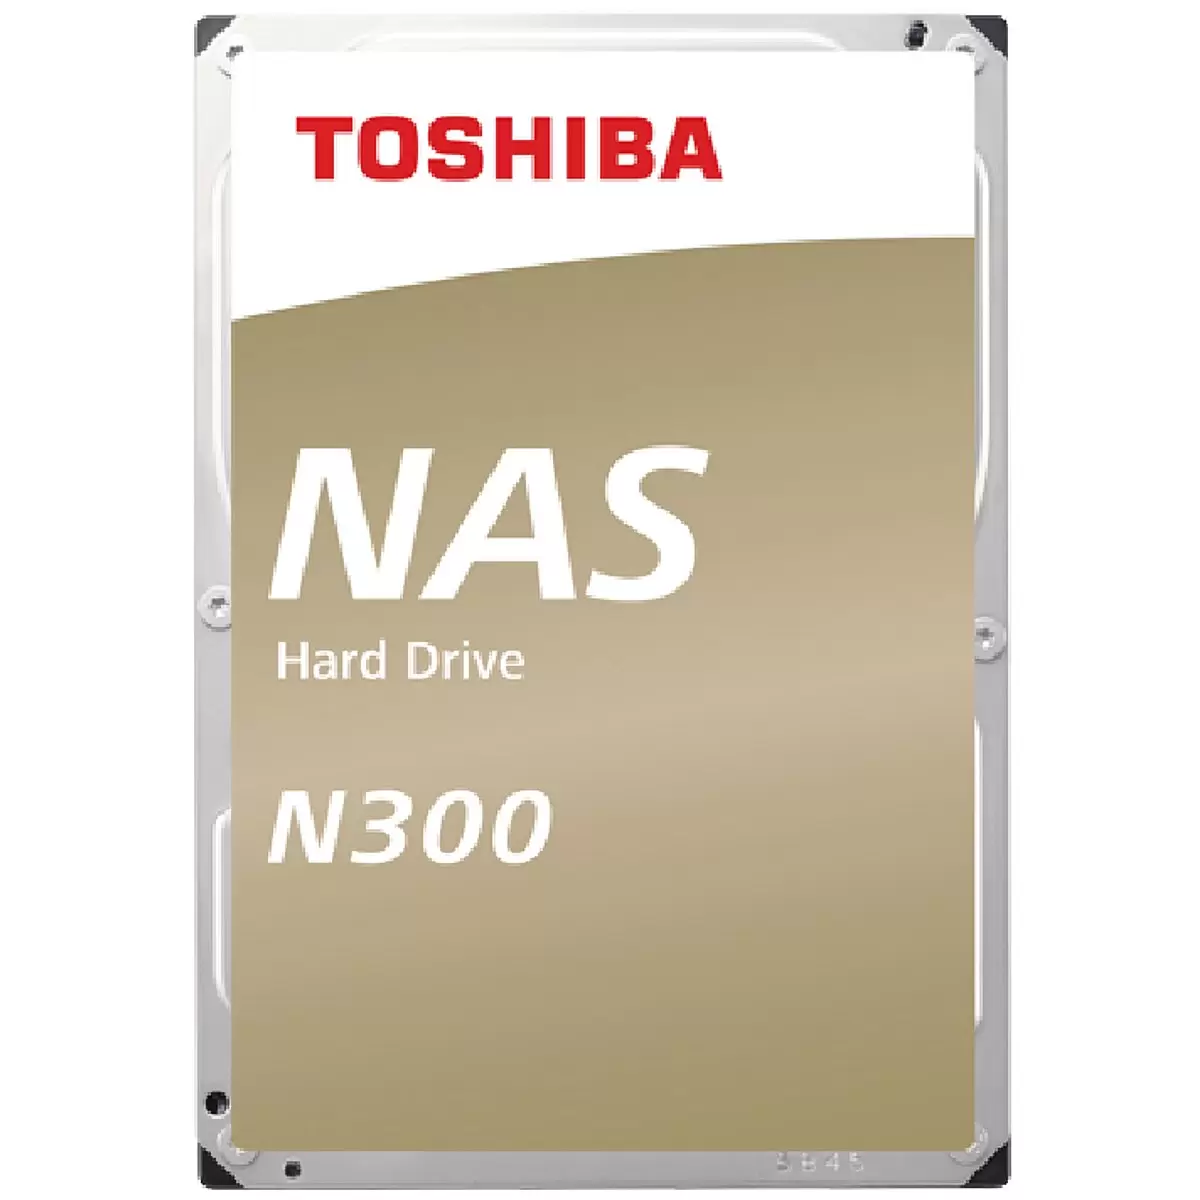 TOSHIBA N300 NAS Hard Drive 14TB BULK